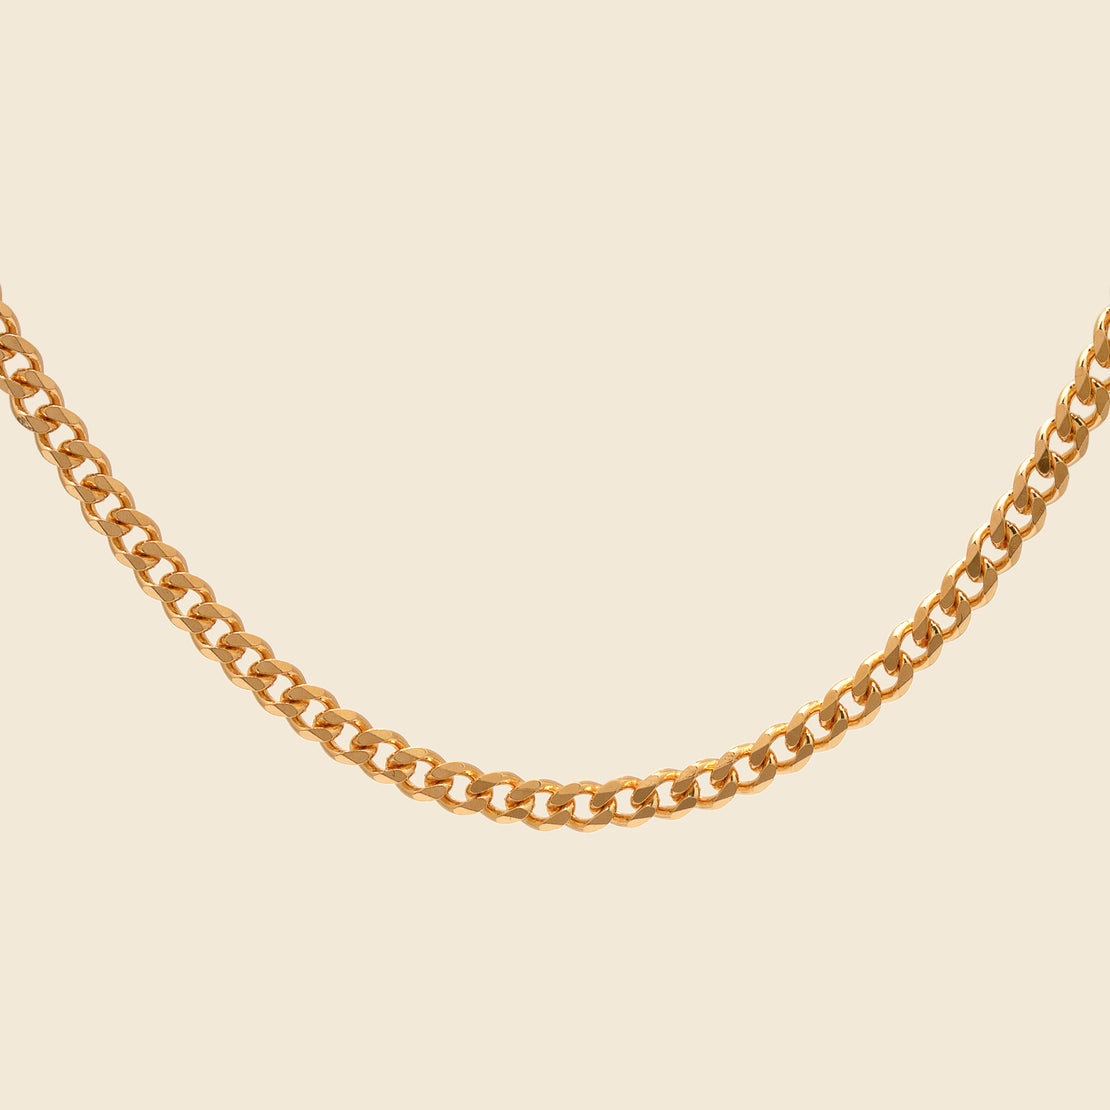 3mm Cuban Chain Necklace - Gold Vermeil - Miansai - STAG Provisions - Accessories - Necklaces